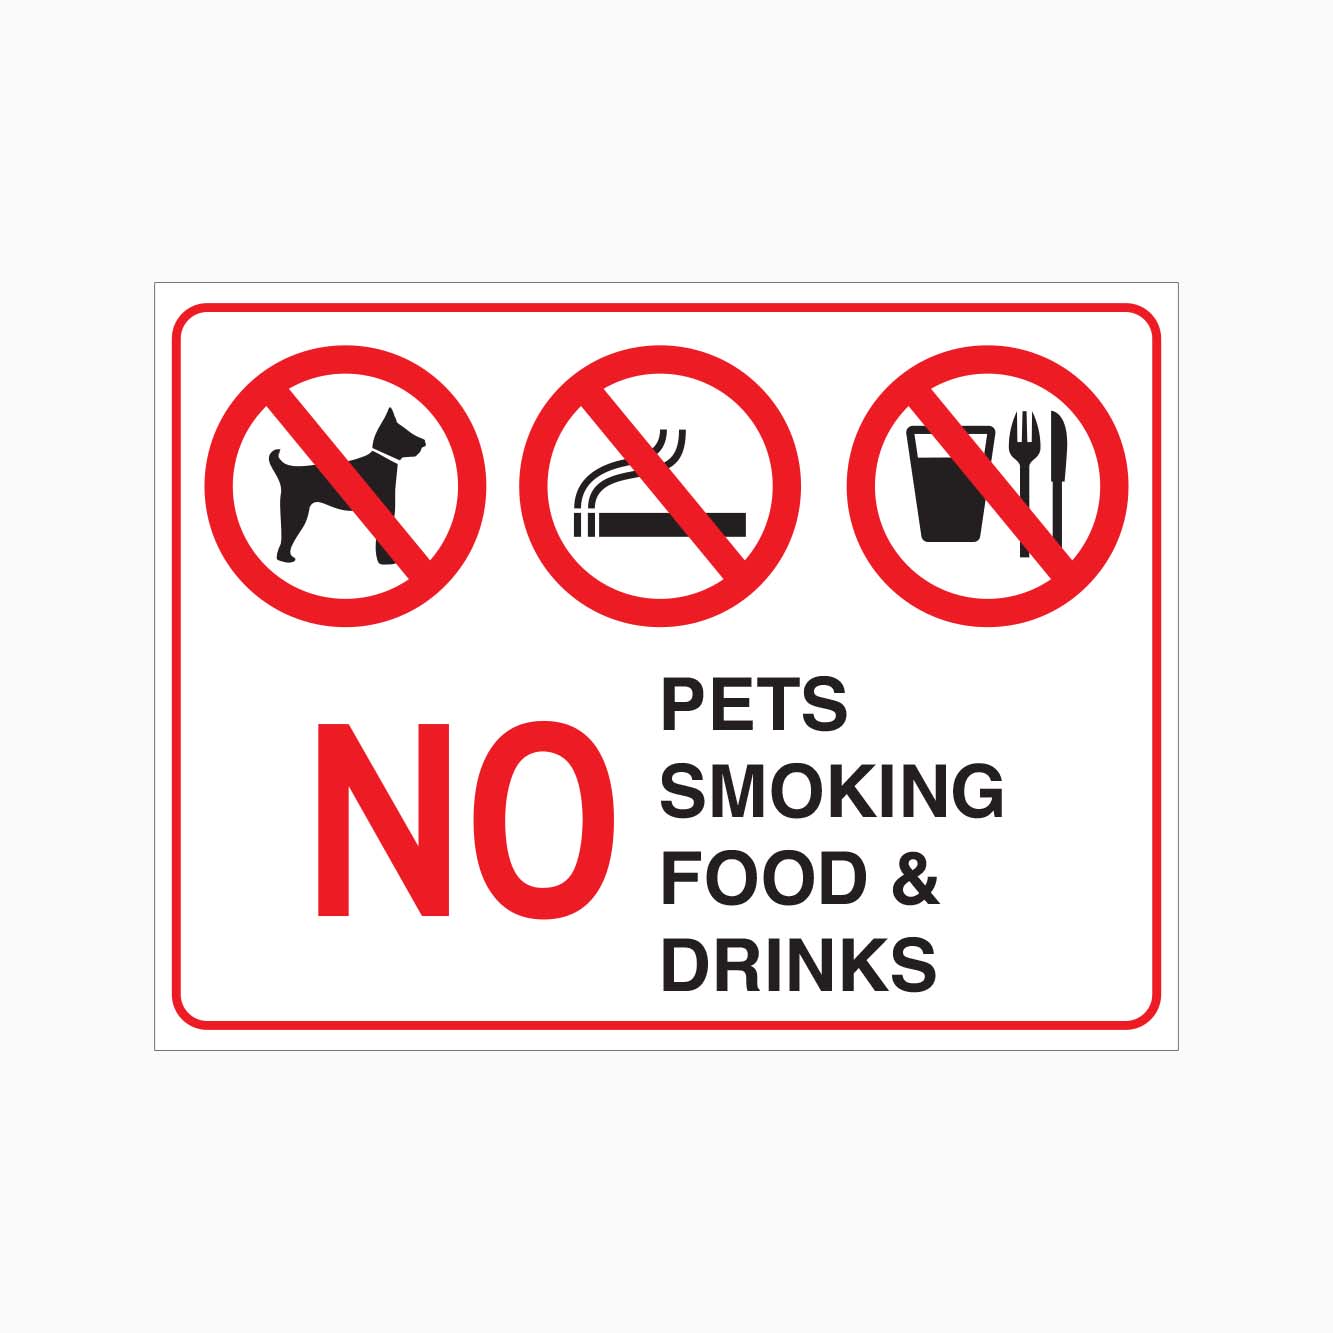 NO PETS SMOKING FOOD AND DRINKS SIGN AT GET SIGNS AUSTRALIA